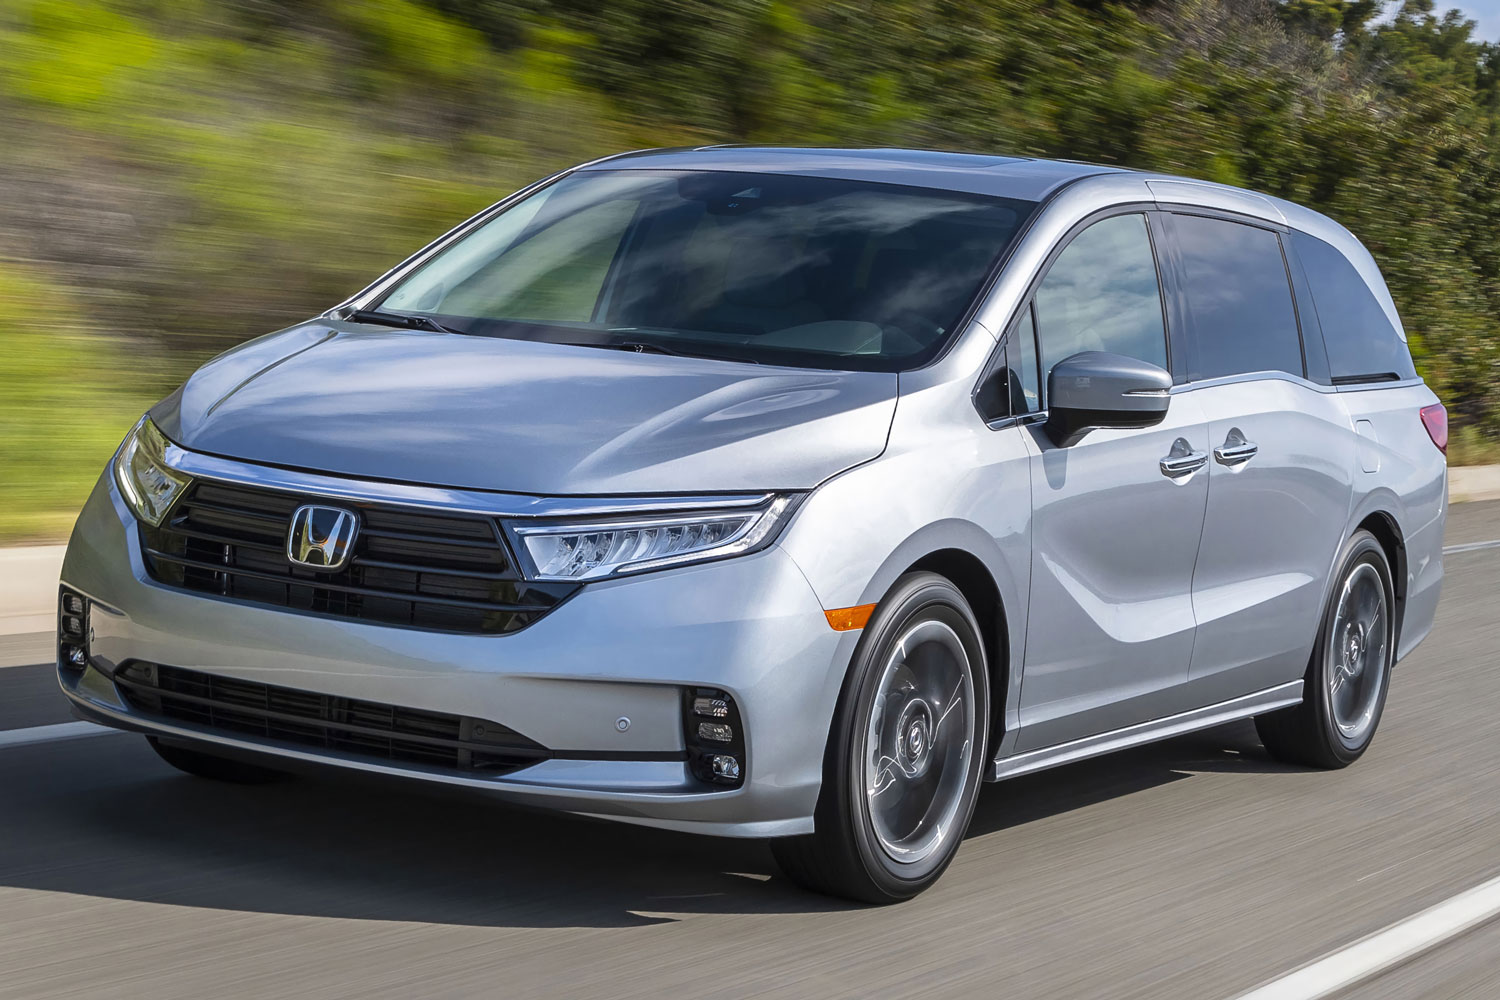 2022 Honda Odyssey Reviews, Price, MPG and More | Capital One Auto Navigator